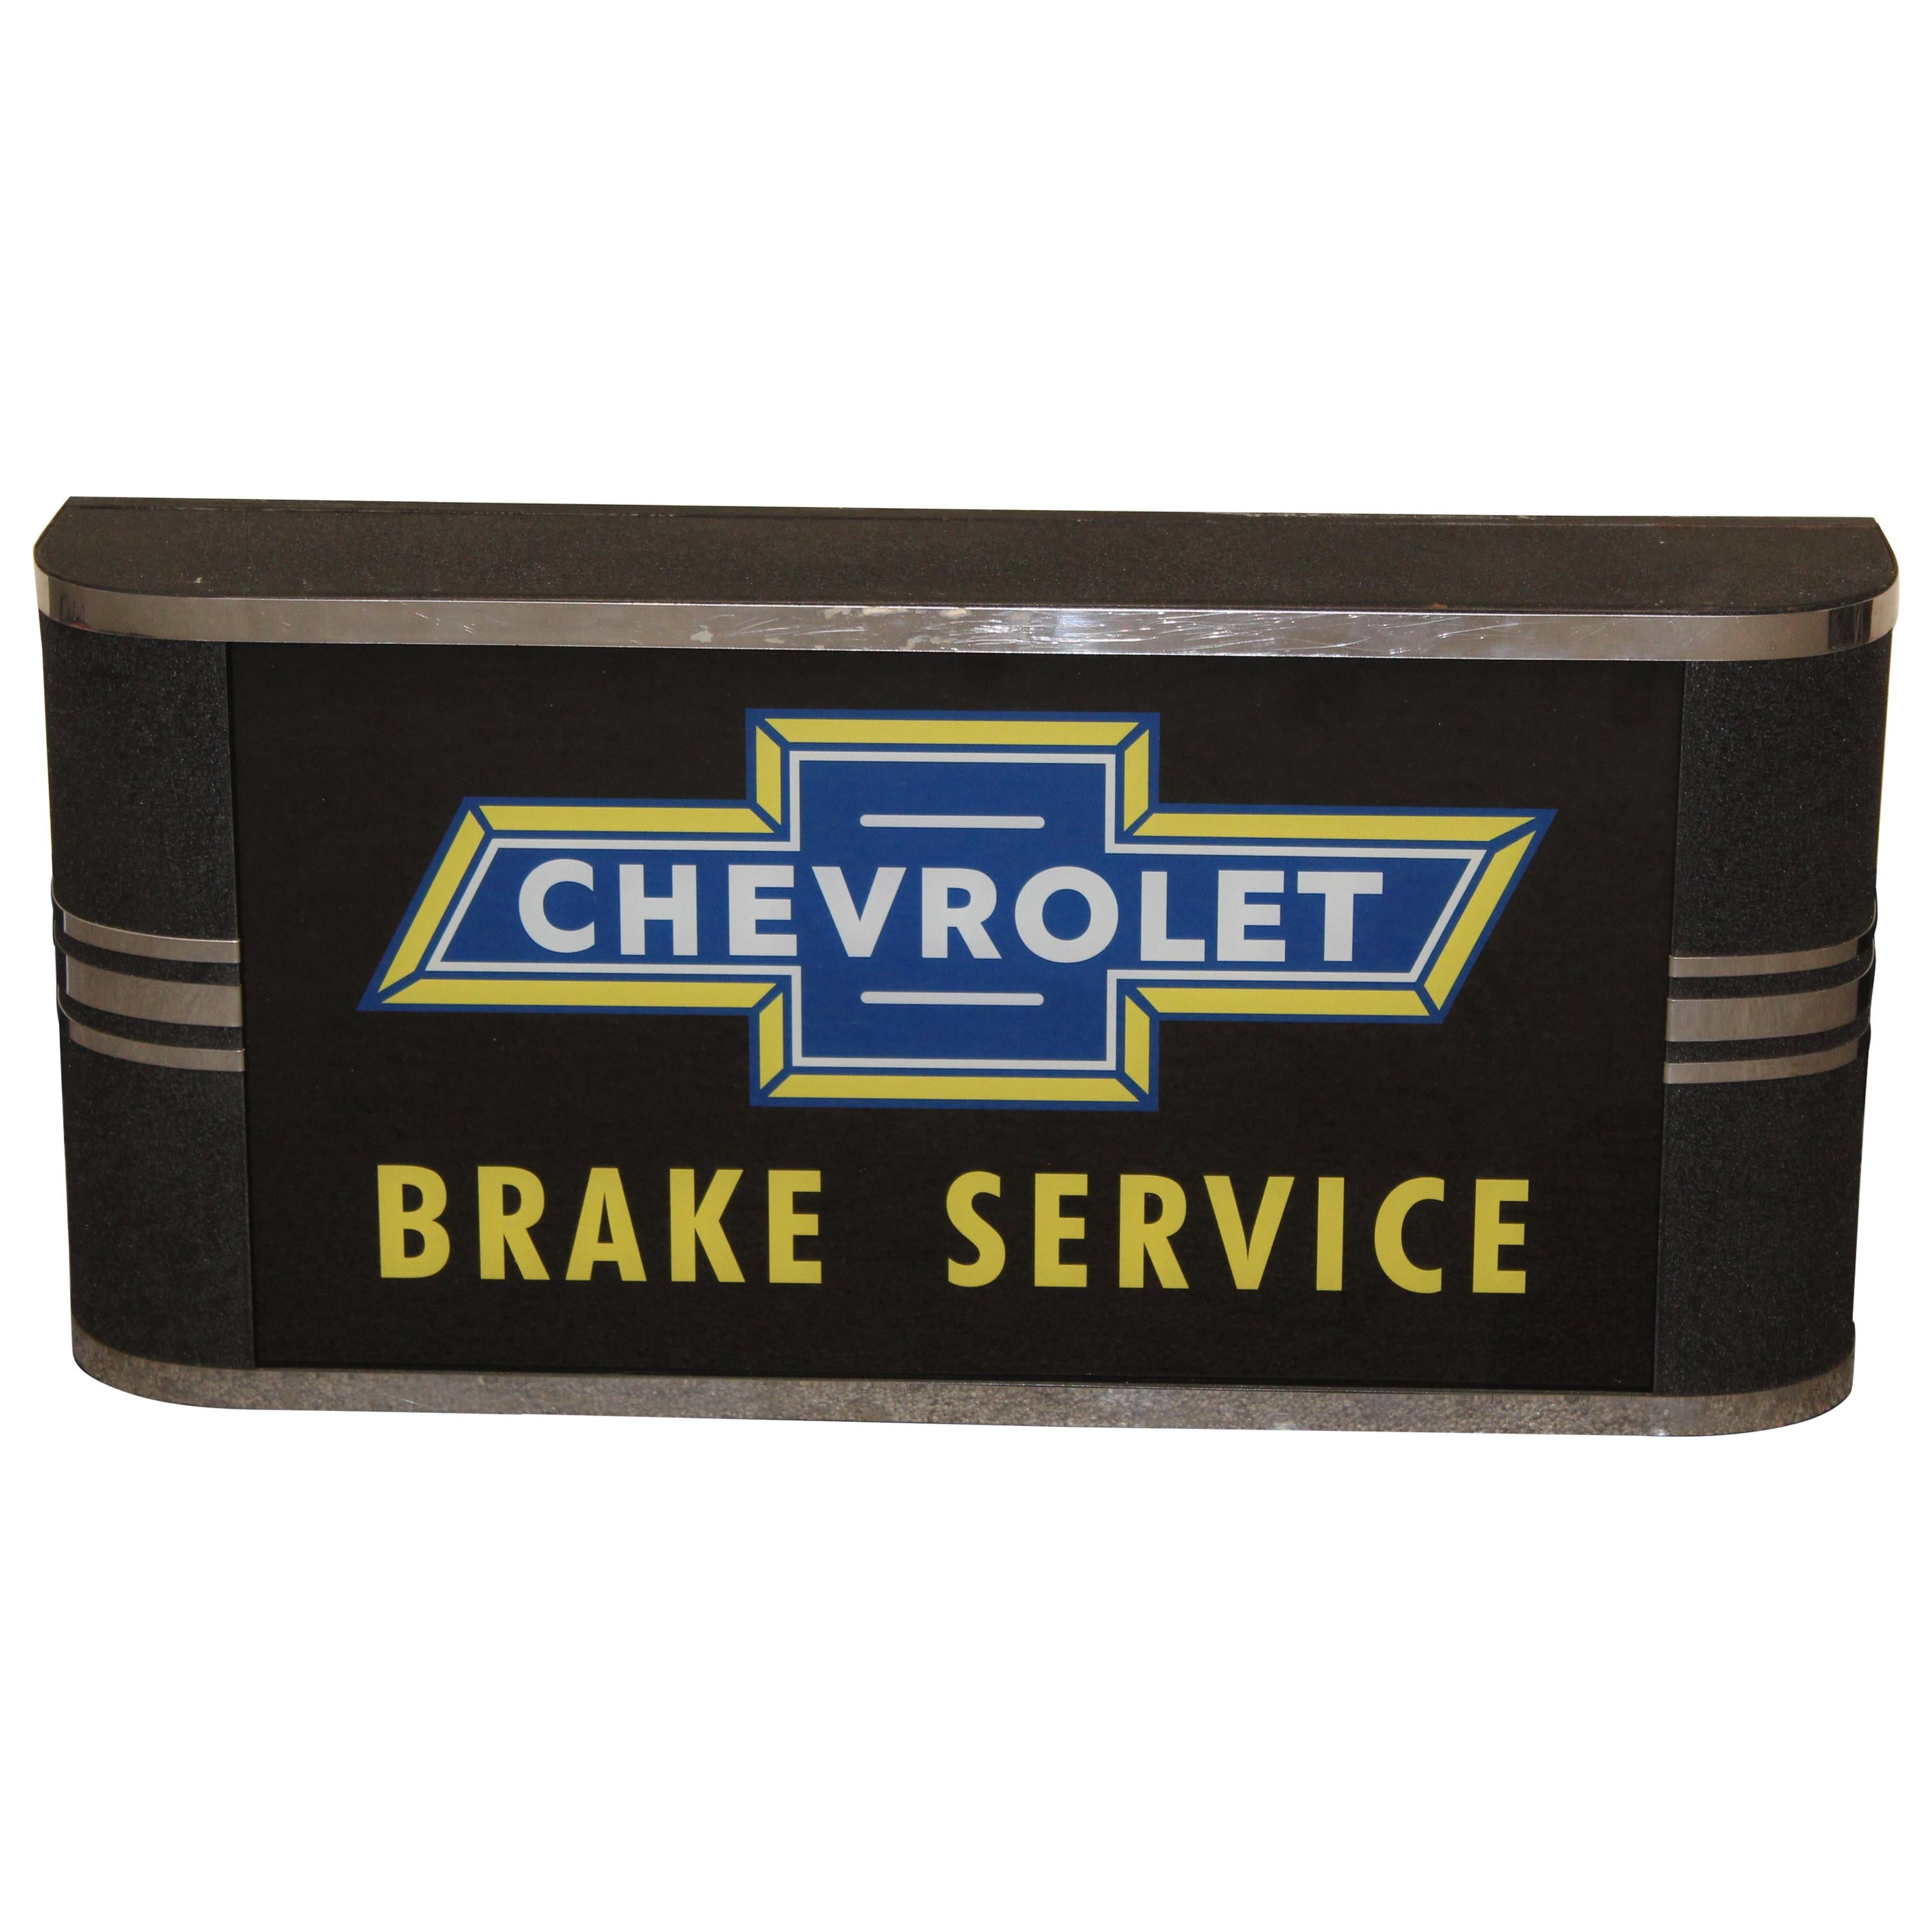 1950s Chevrolet Brake Service Department Sign For Sale